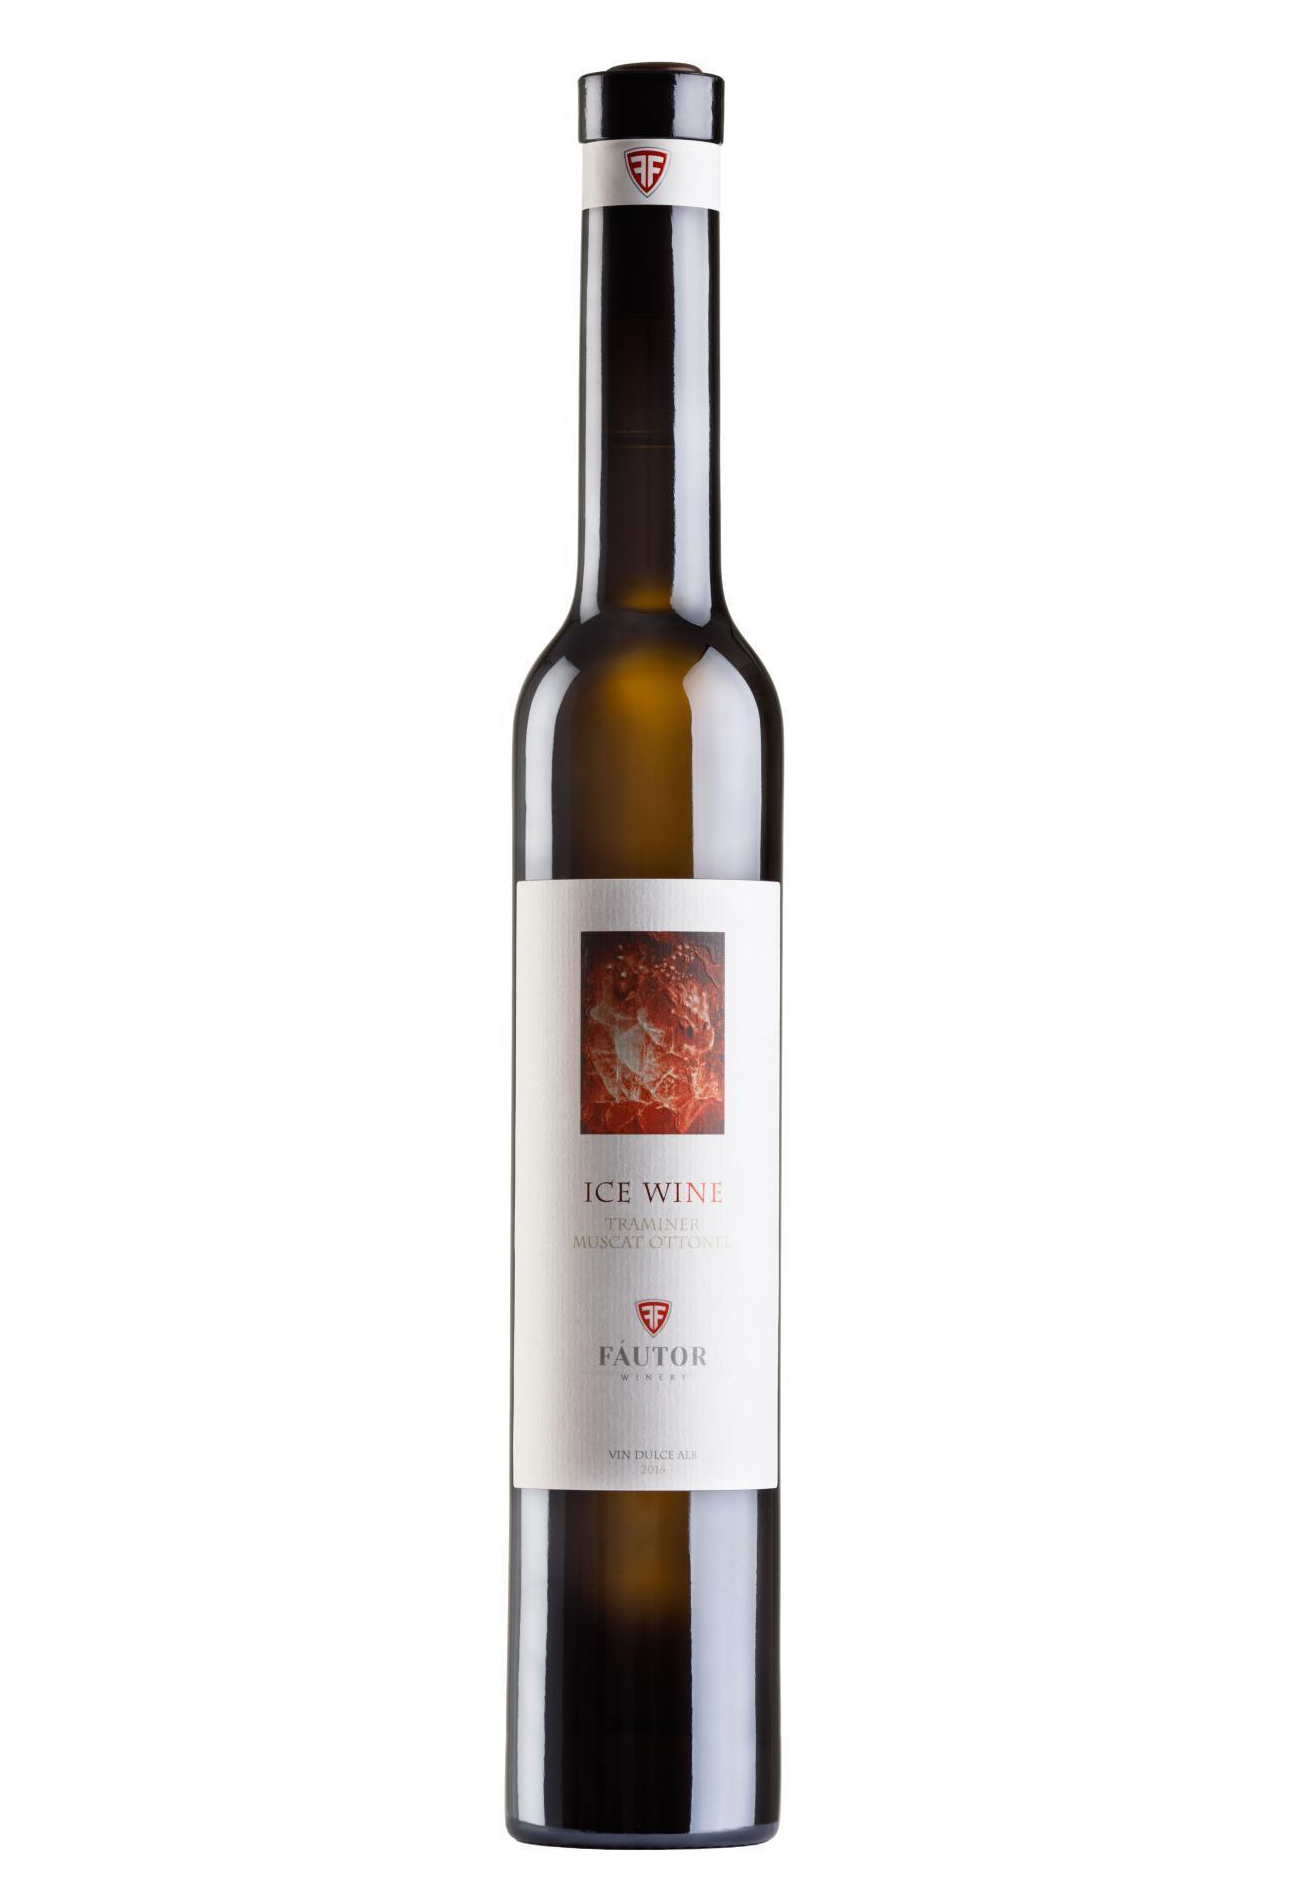 Vin alb - Fautor, Ice Wine Traminer, Muscat Ottonel, dulce, 2016 | Fautor Wine image1